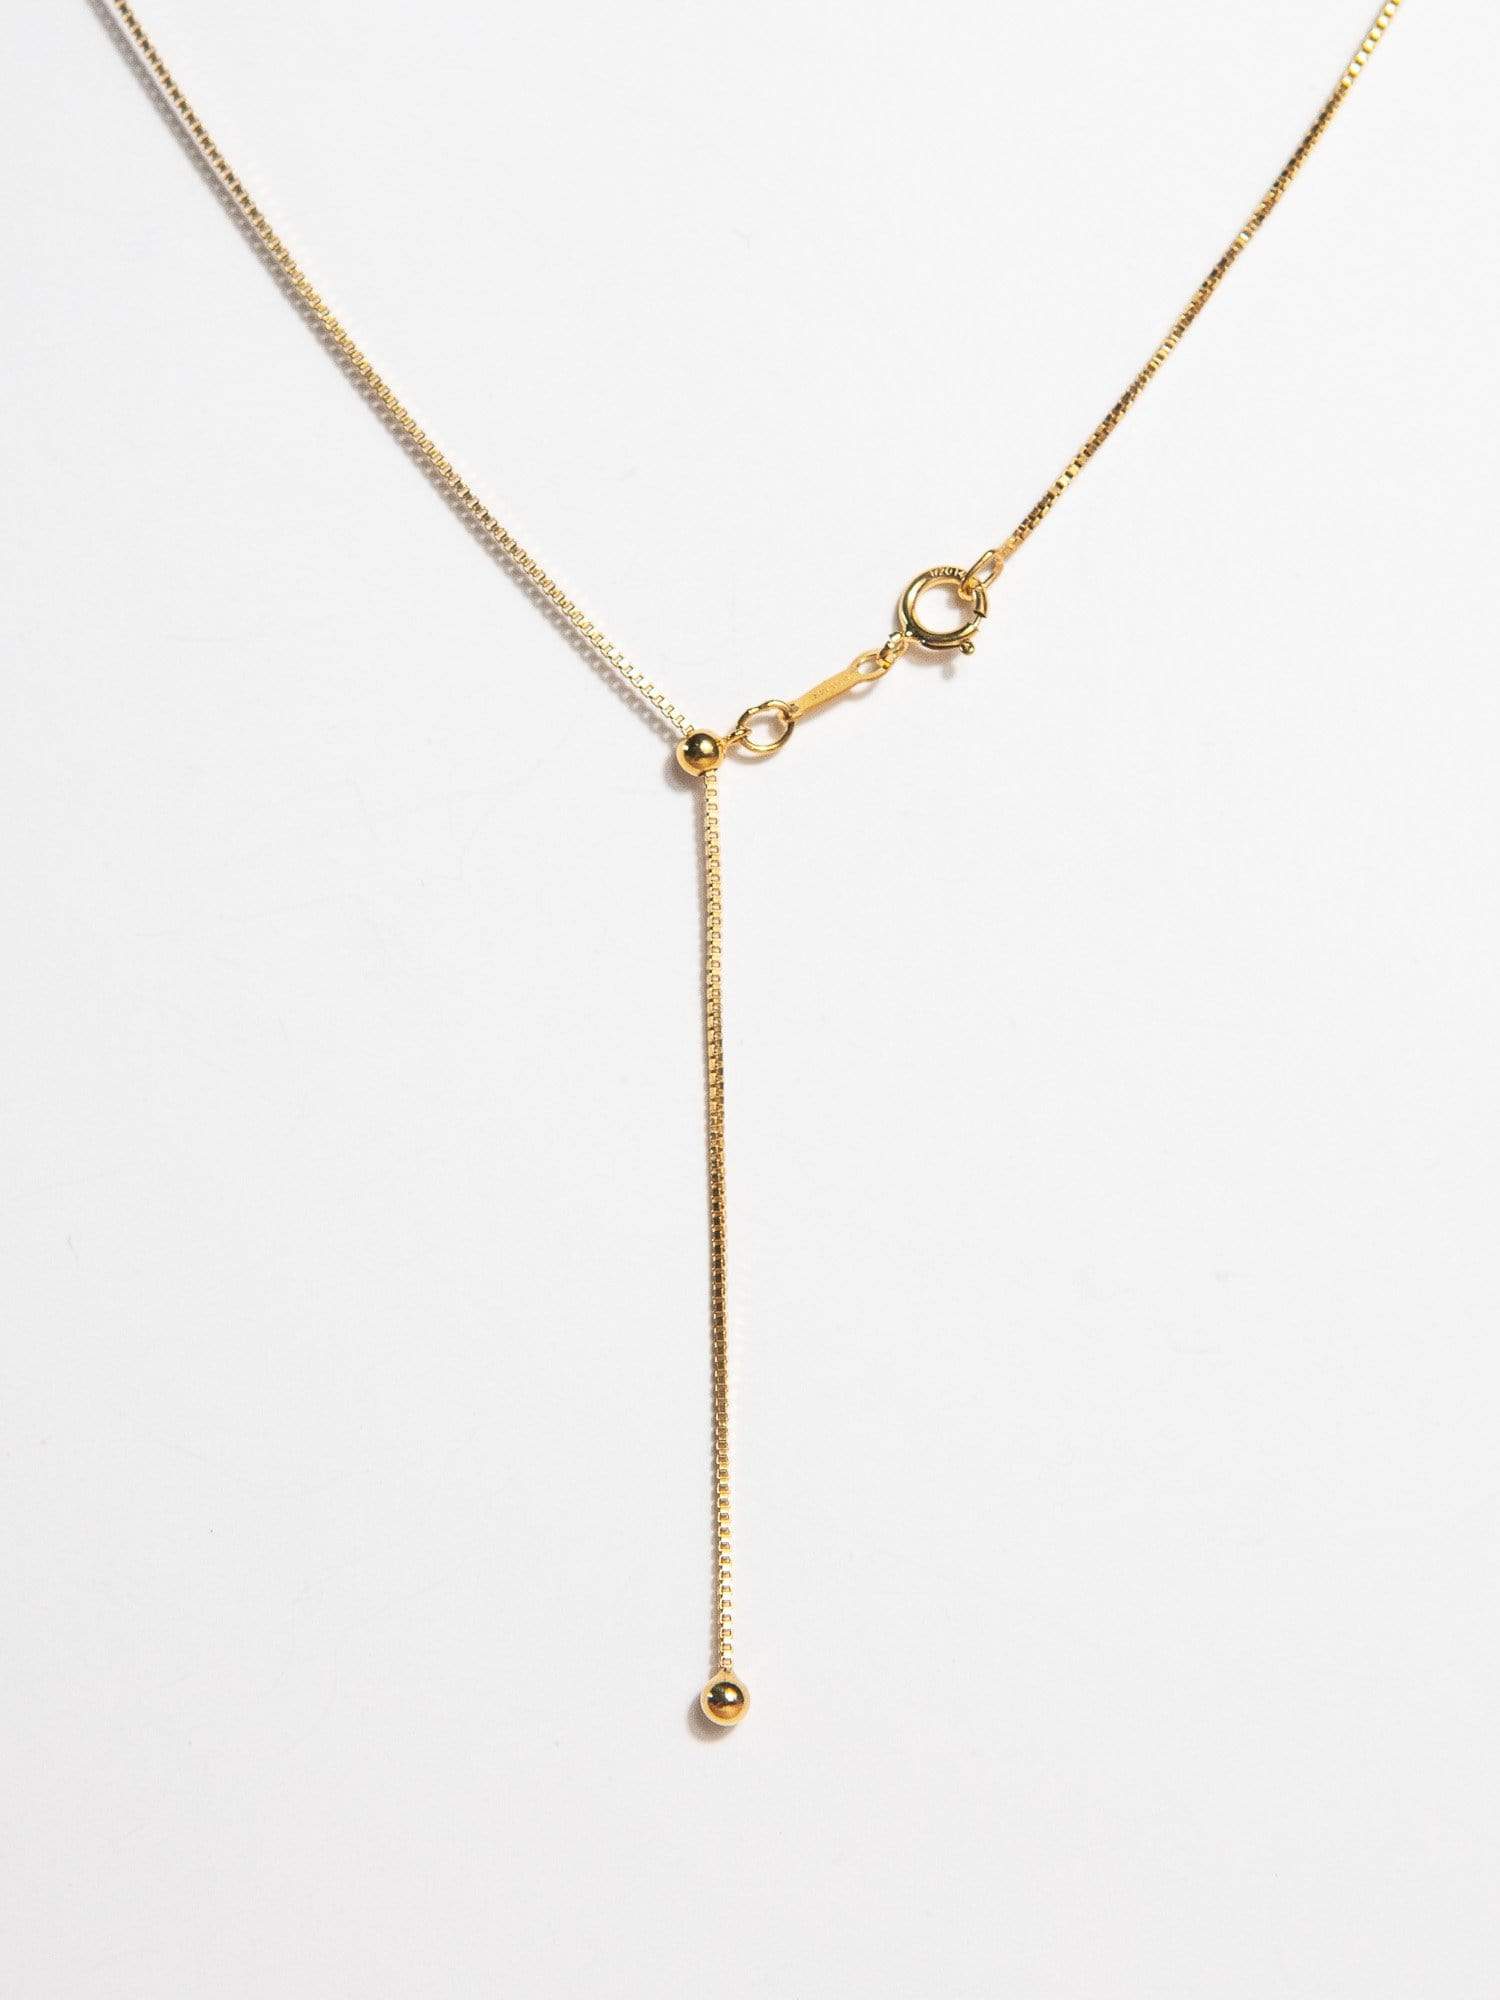 OXBStudio Necklace Lariat Chain